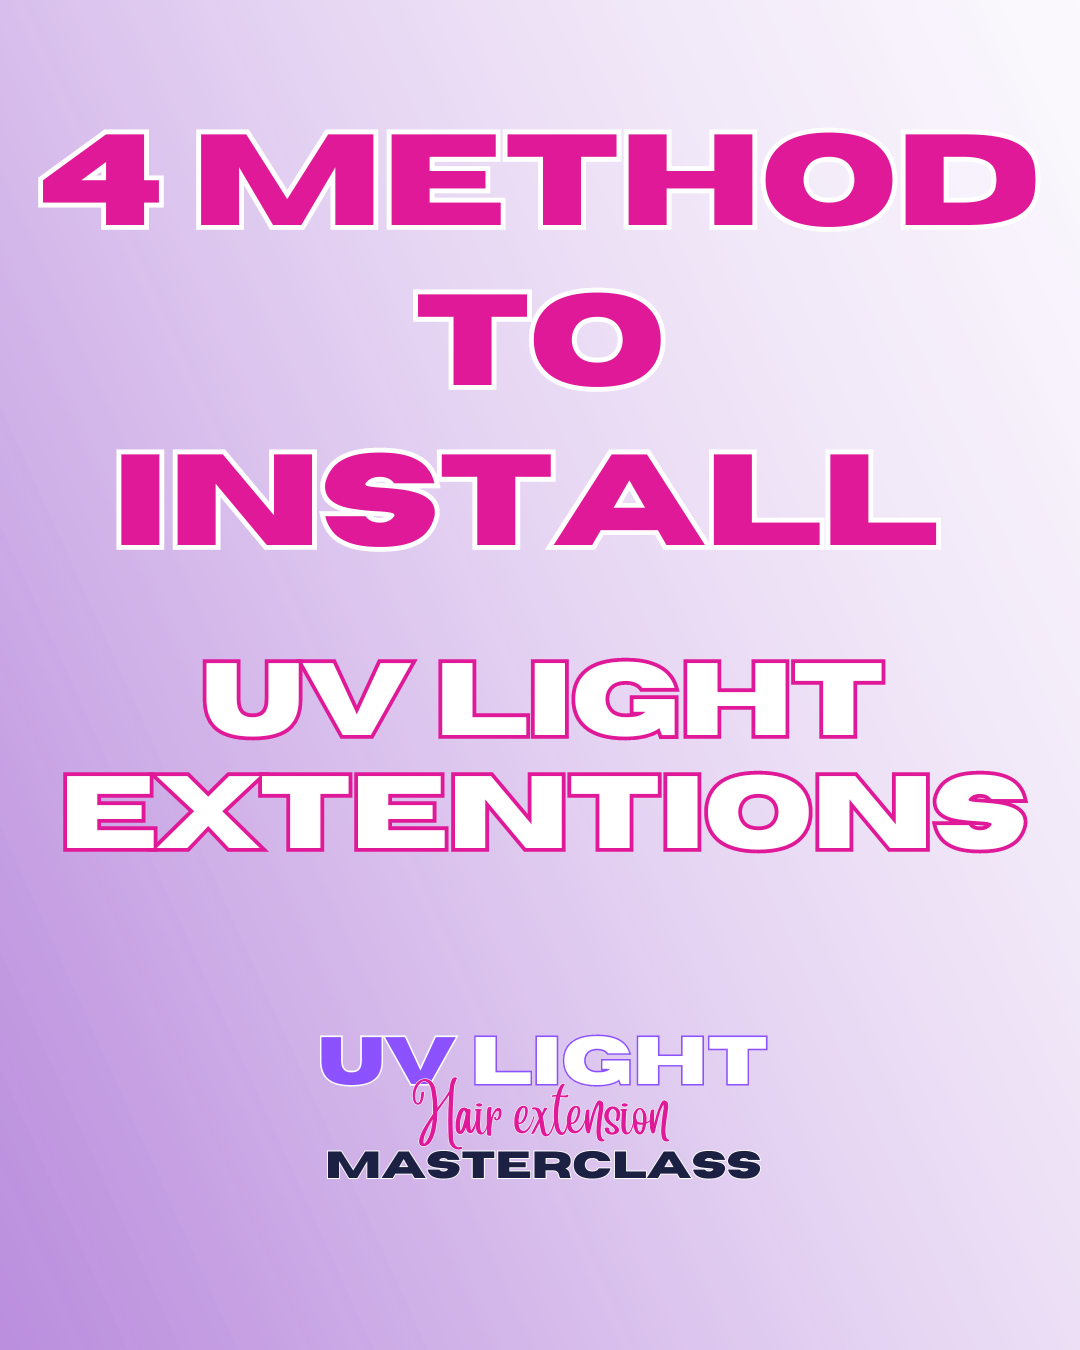 UV Light Hair Extension Masterclass - SEE DESCRIPTION-Online Course-Blessedluv.com-Brazilianweave.com